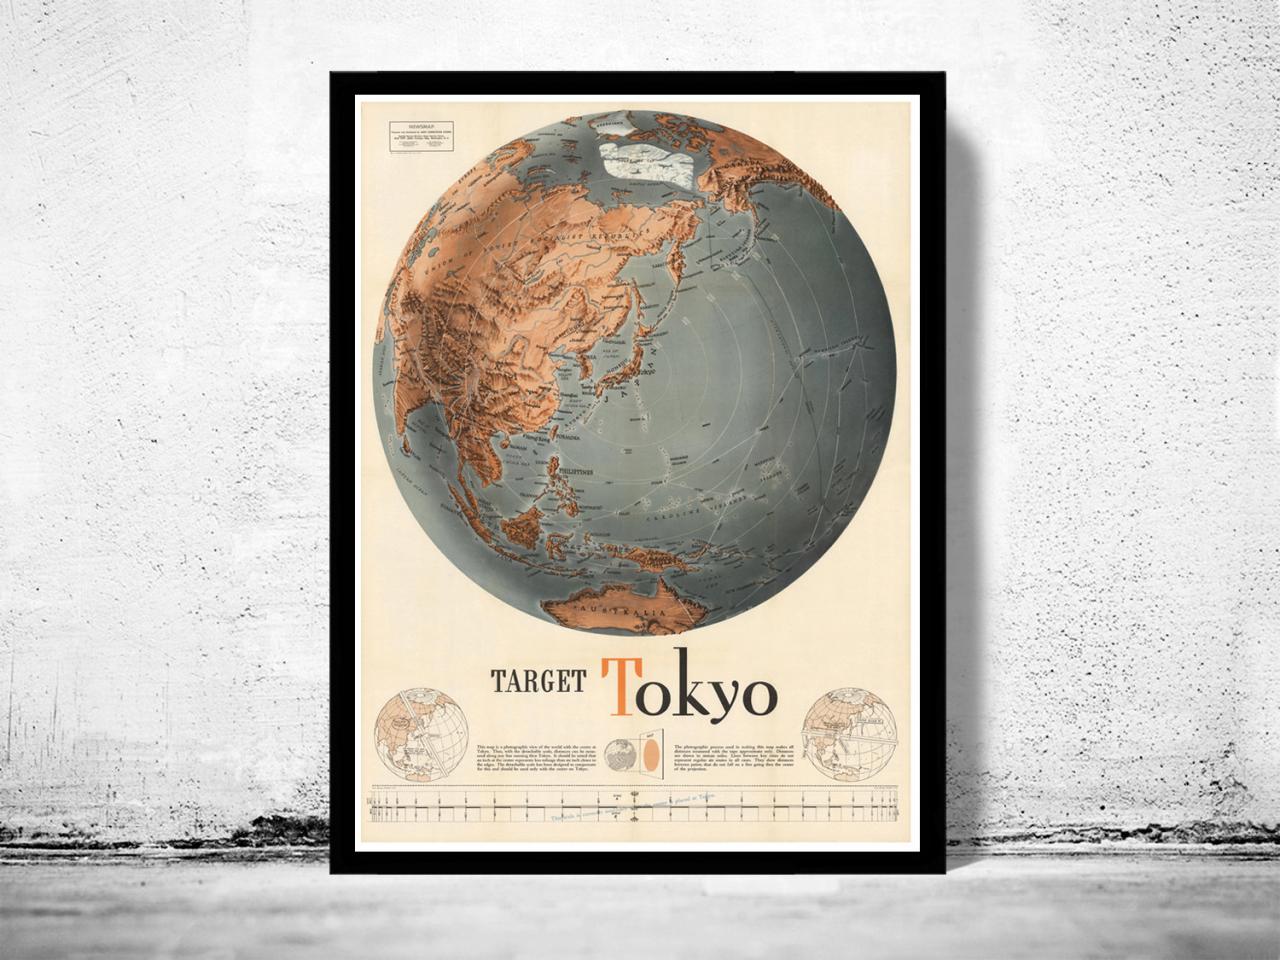 Vintage target Tokyo Japan war map poster